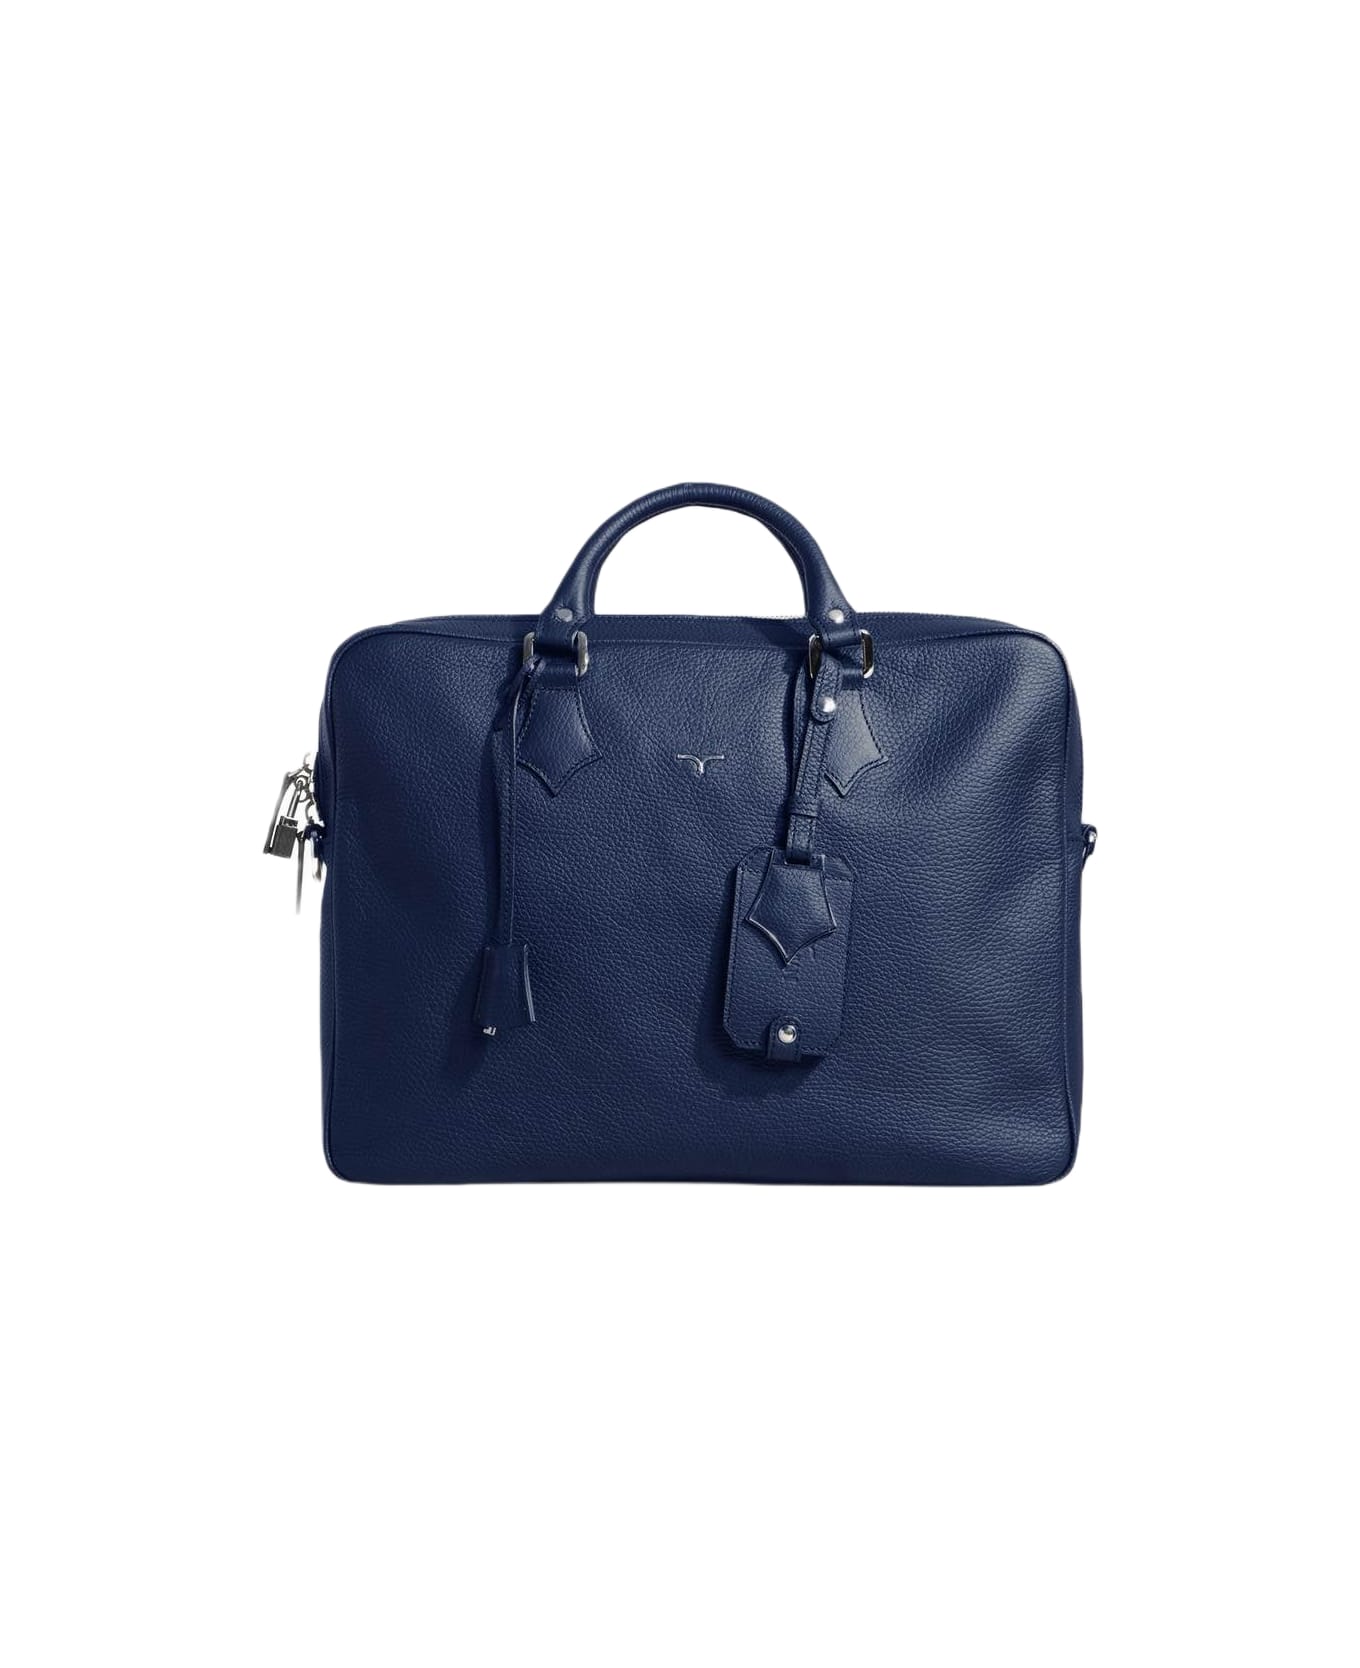 Larusmiani Briefcase 'piazza Affari' Luggage - Blue トラベルバッグ